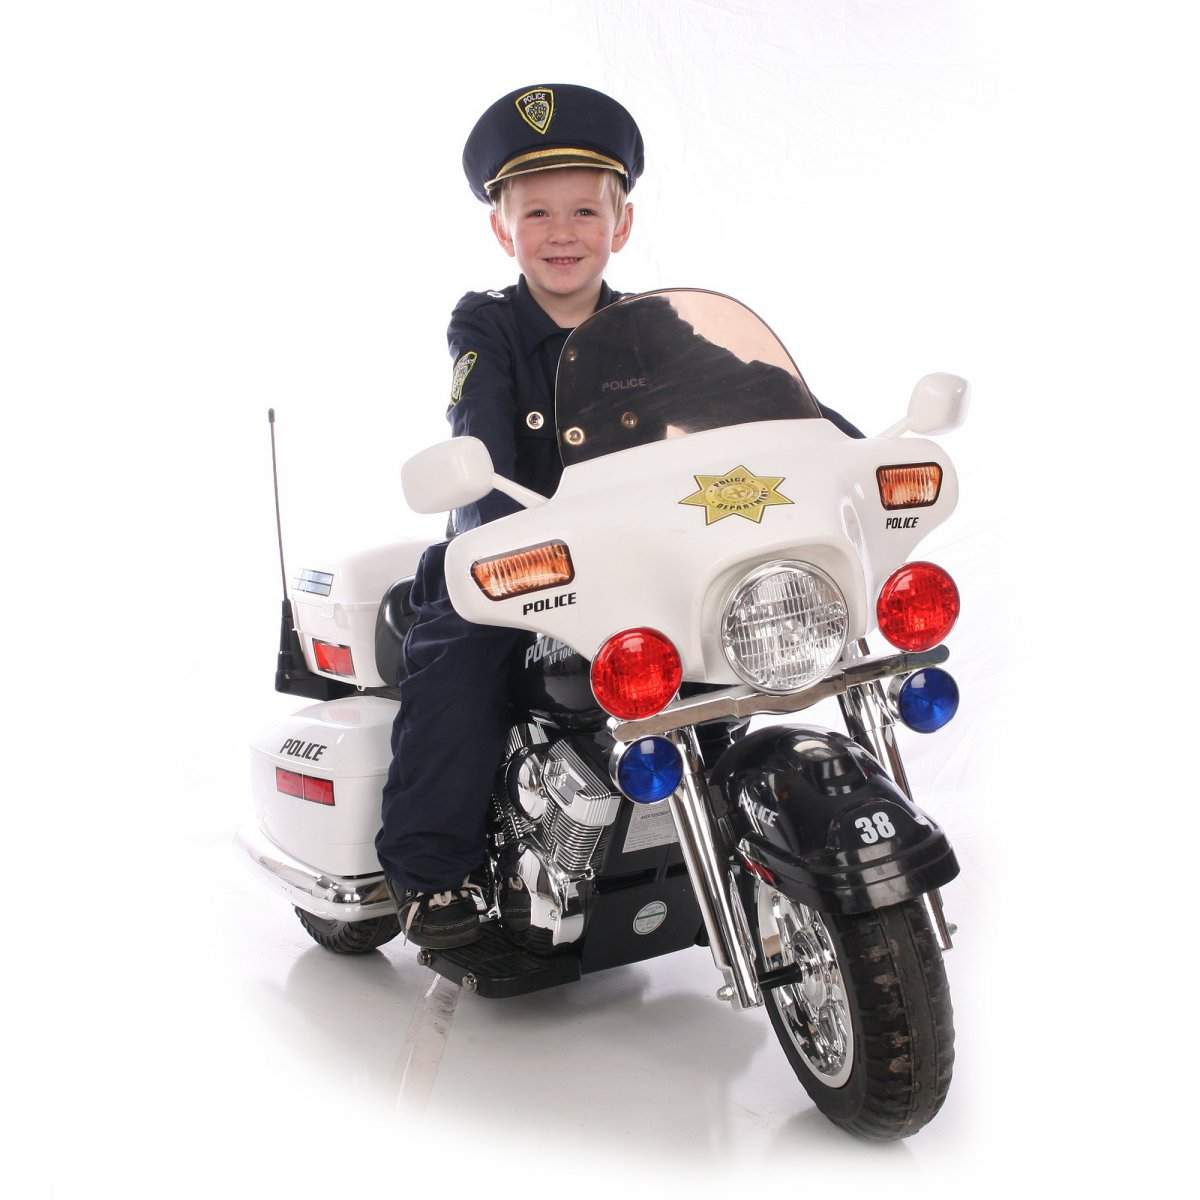 Дети ездят на мотоциклах. Мотоцикл Patrol Police детский. Детский электромотоцикл Moto Police. Детский мотоцикл на аккумуляторе Patrol Police. Малыш на мотоцикле.